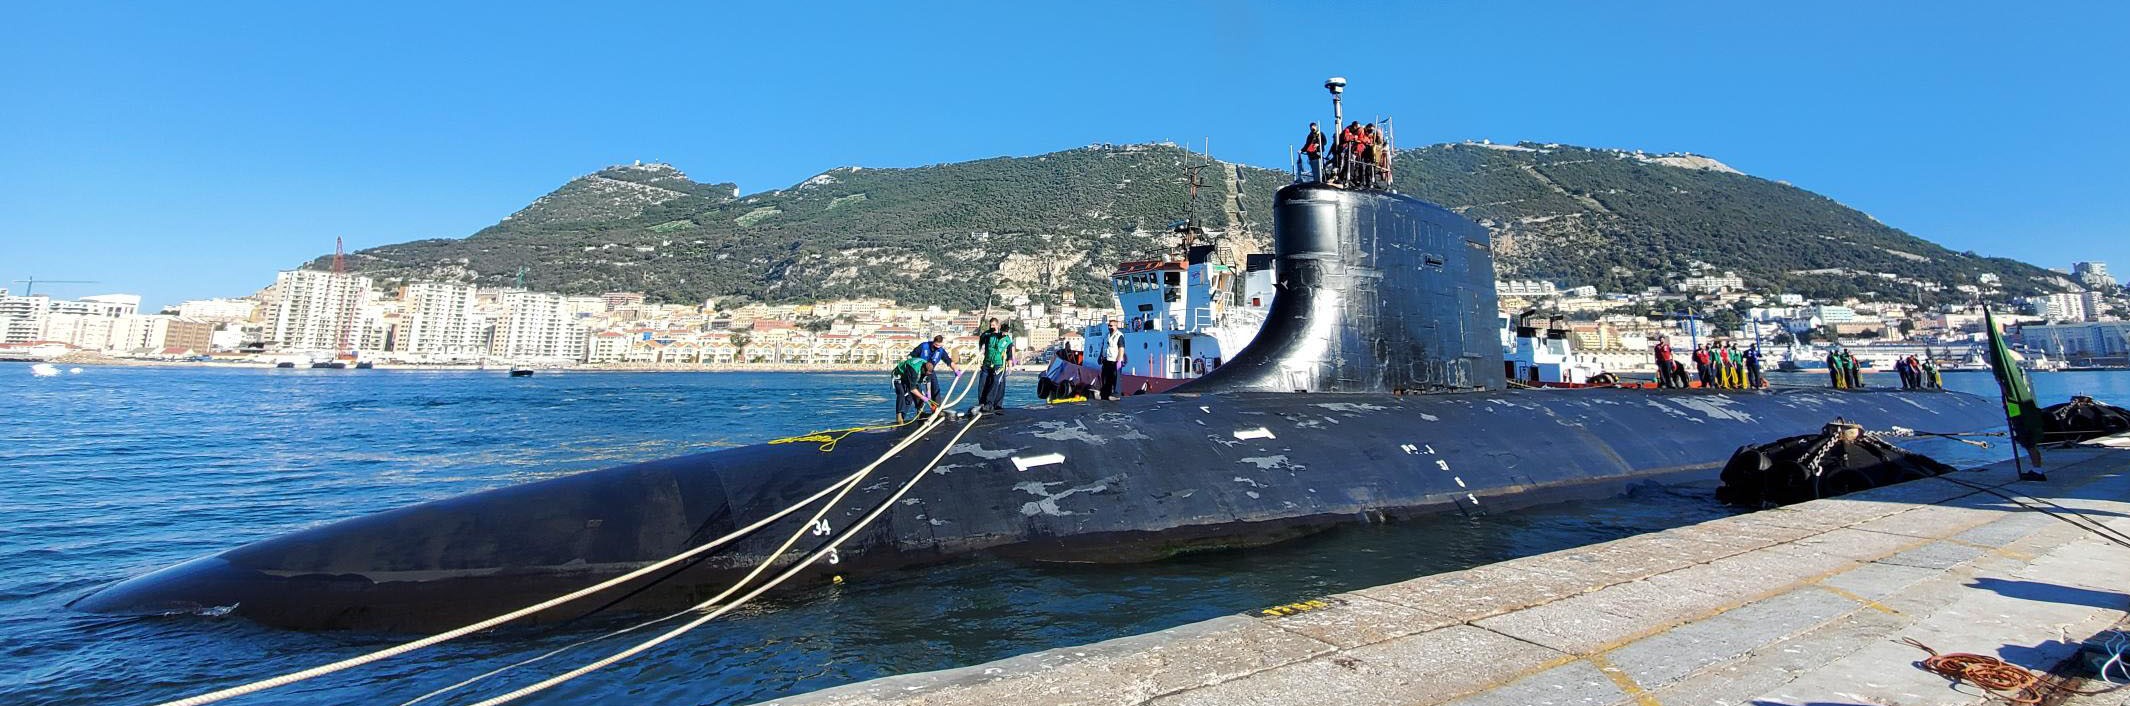 ssn-21 uss seawolf attack submarine us navy gibraltar 2020